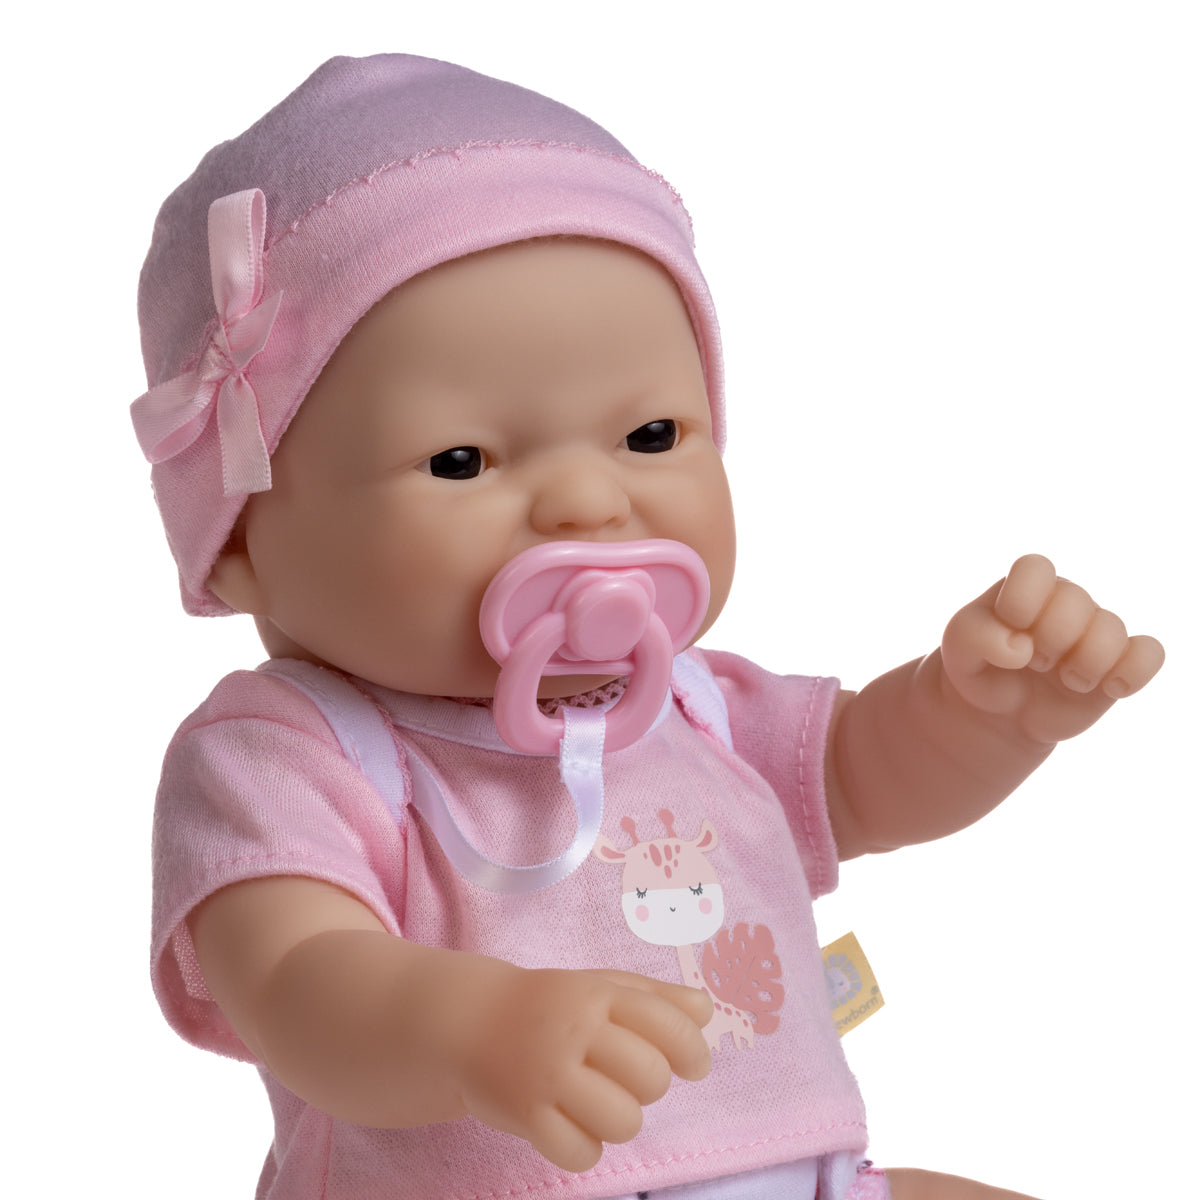 JC Toys, La Newborn 12 inches Asian All Vinyl Nursery Gift Set Doll